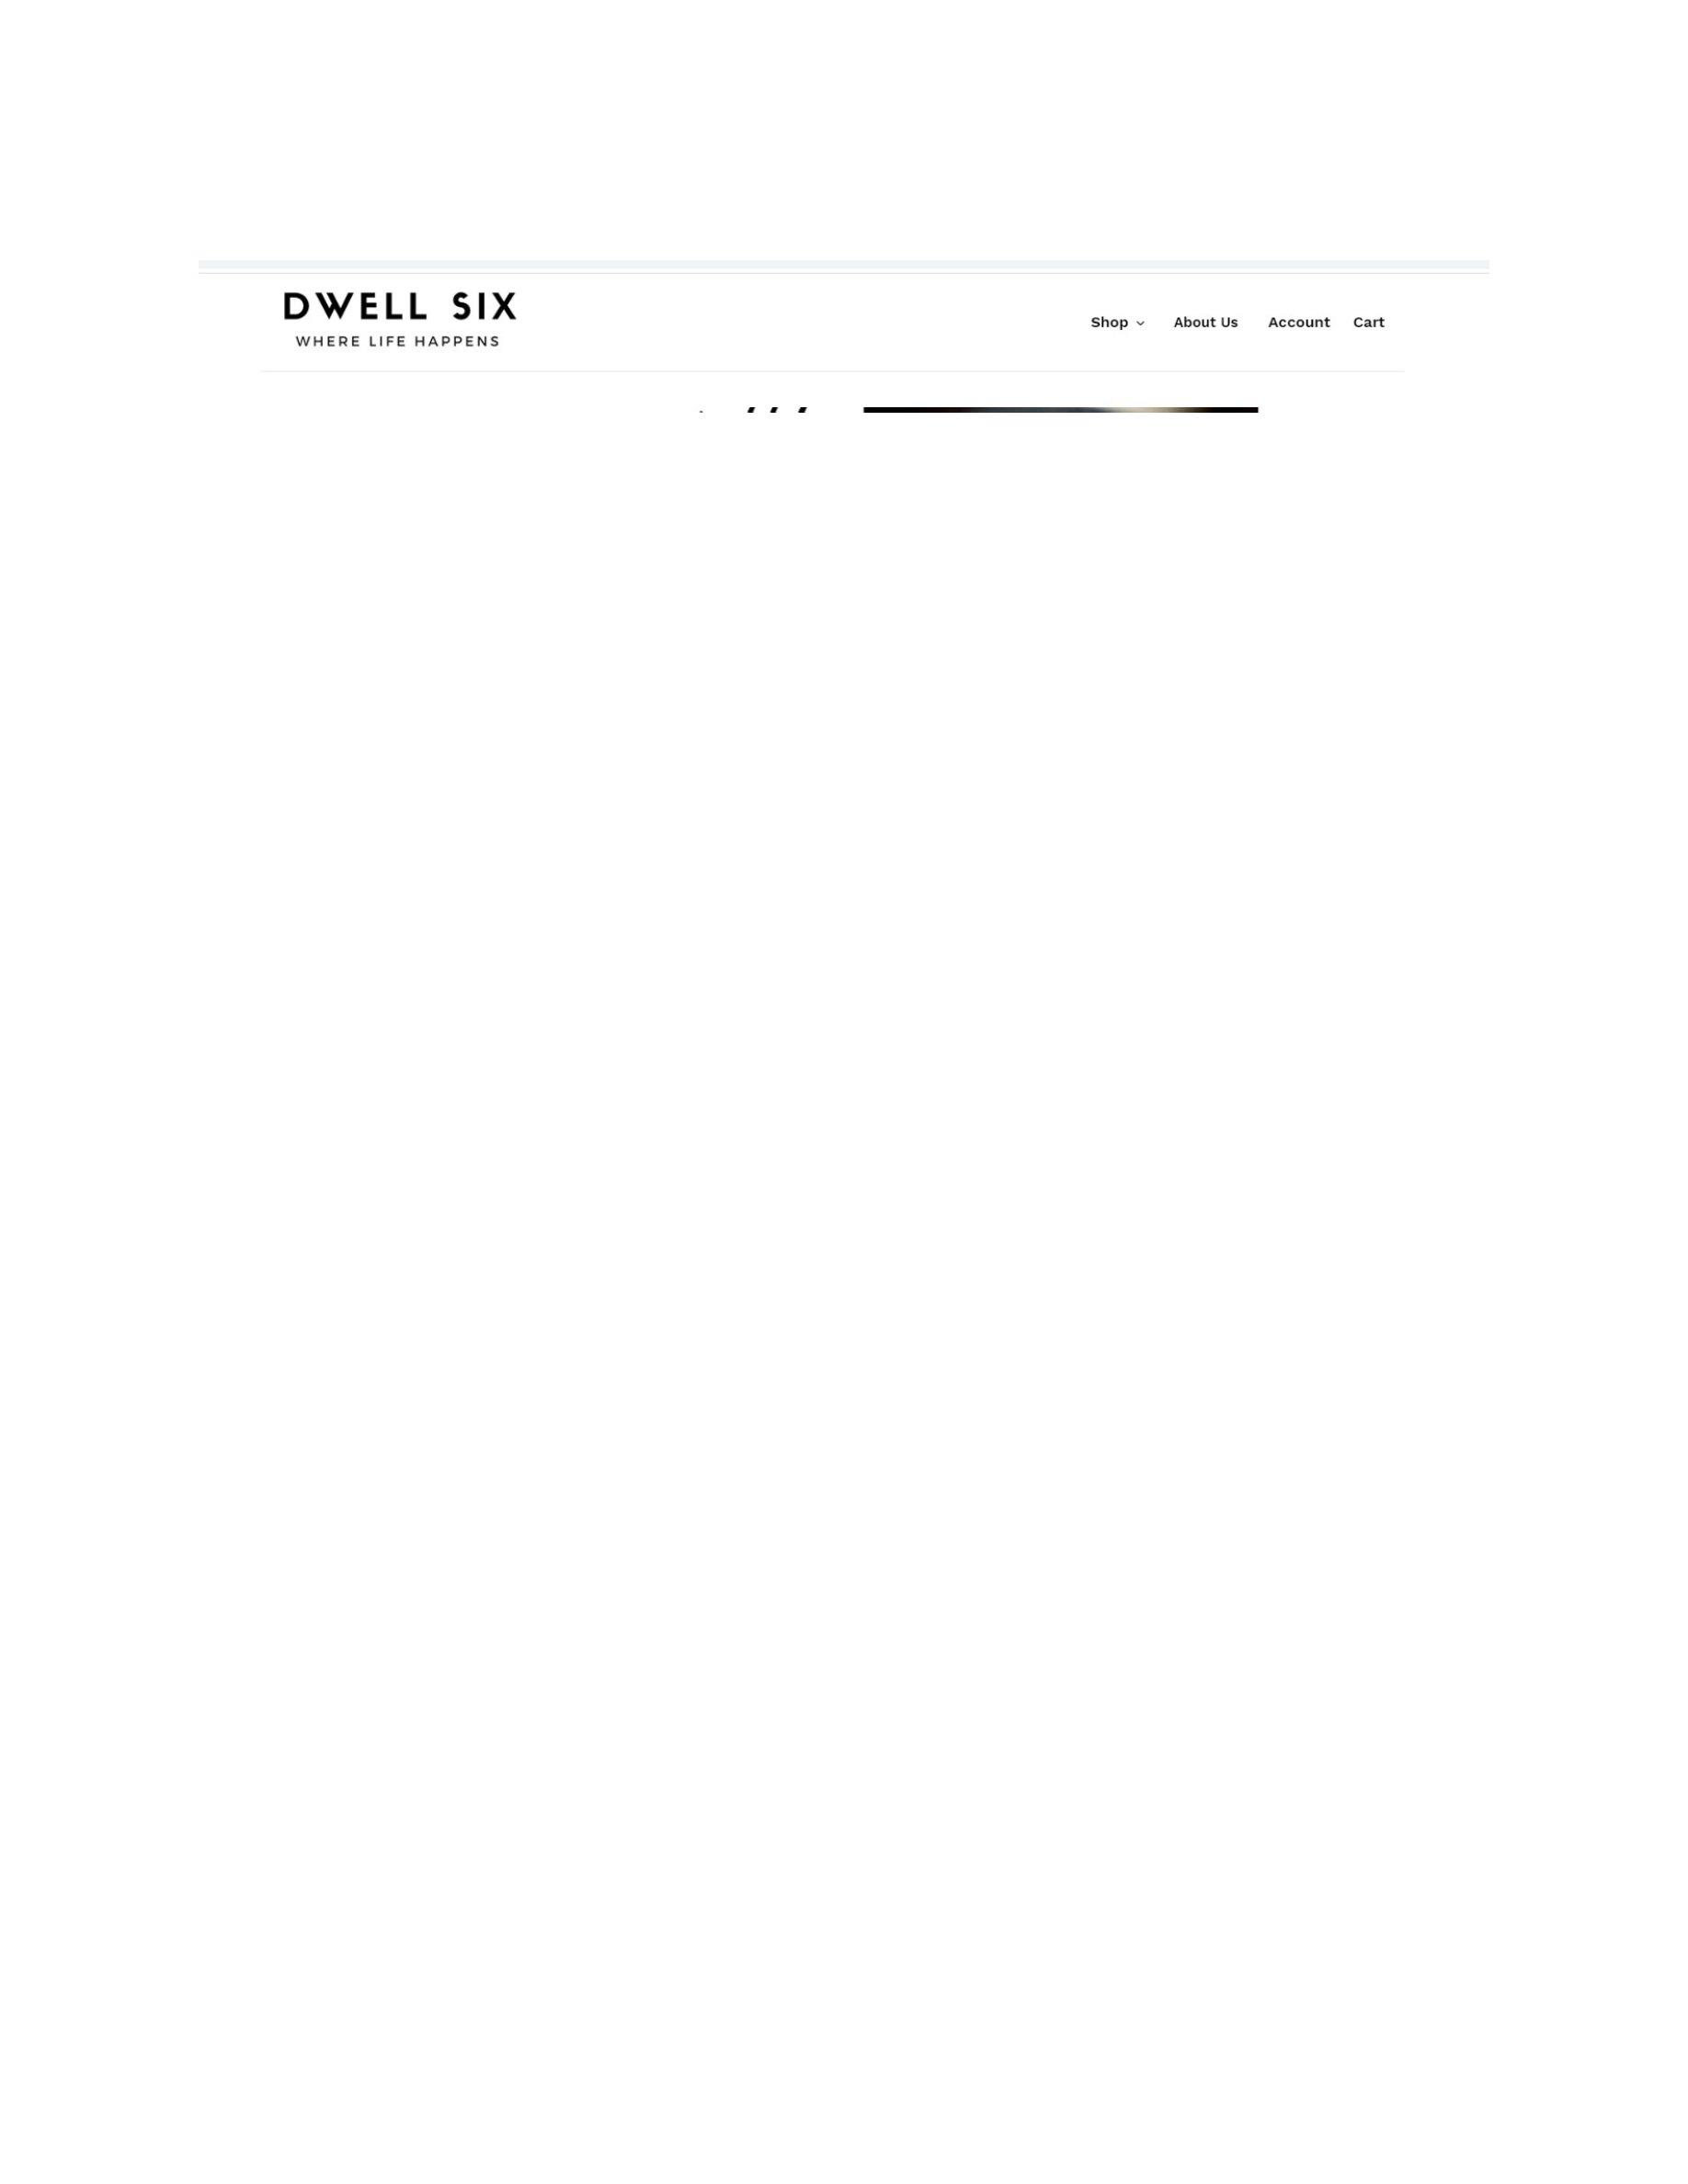 DWELL SIX - Loyalty & Incentive Merchandise Imports Trademark Registration